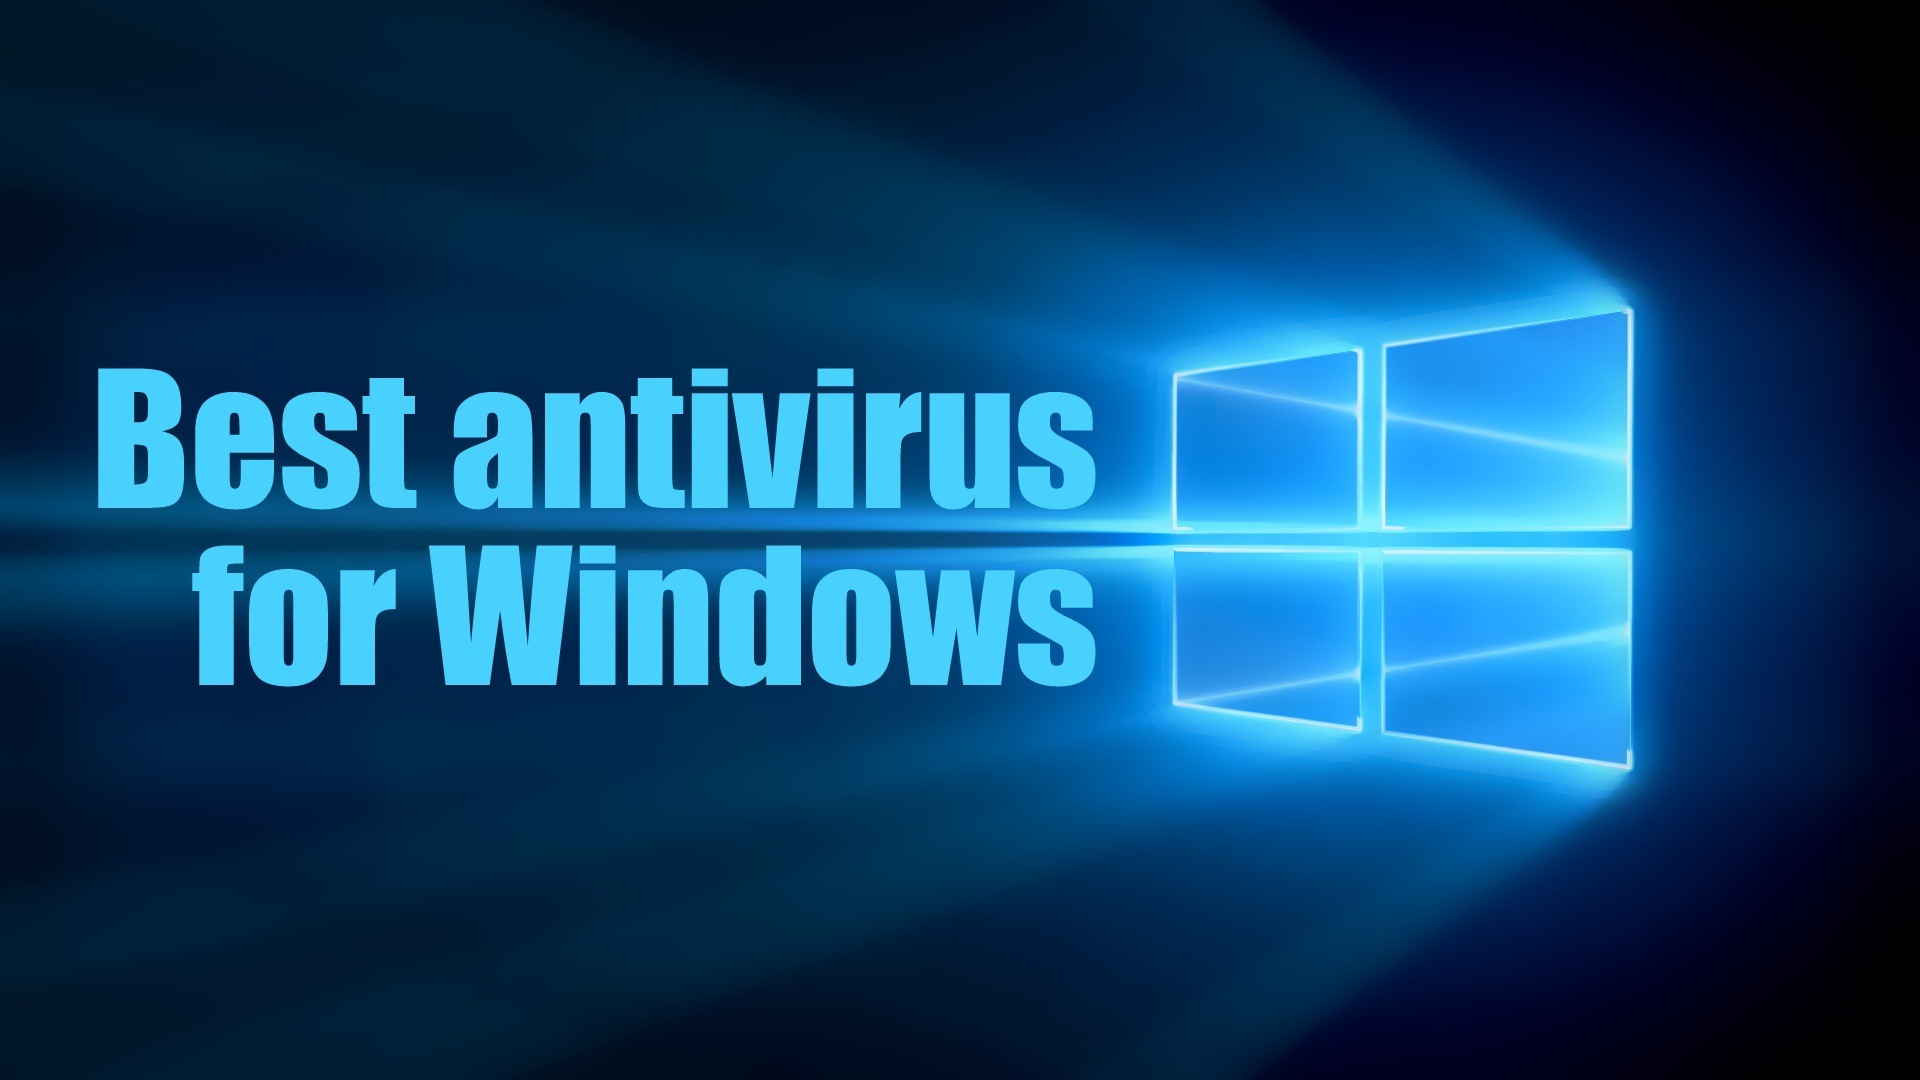 free download antivirus for windows 10